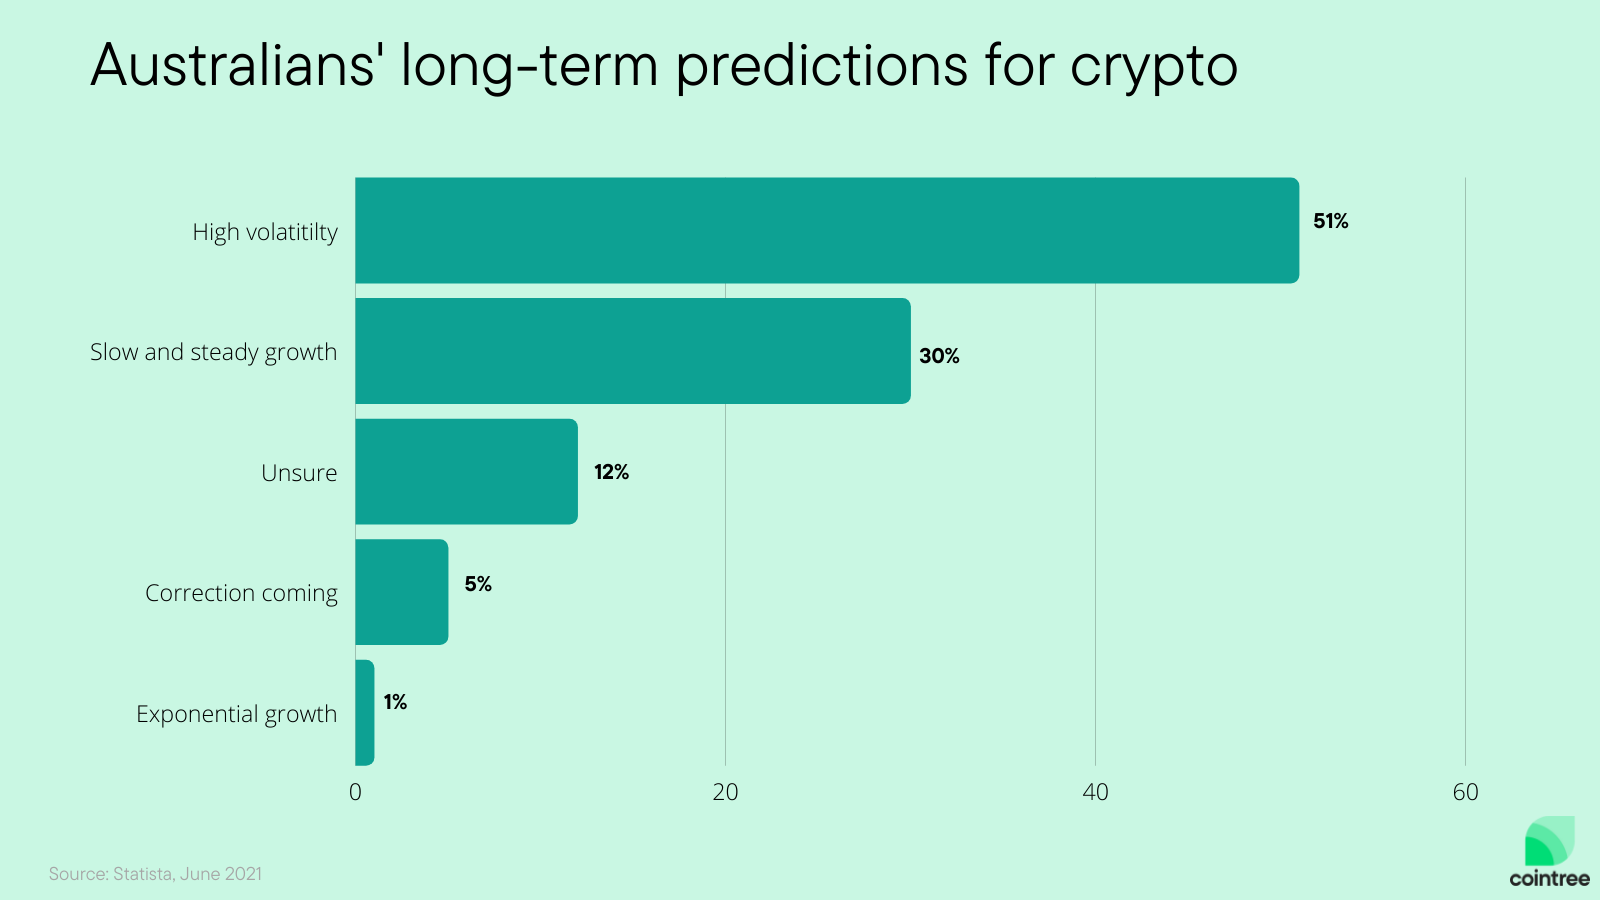 50% of Australians predict cryptos high volatility will continue.